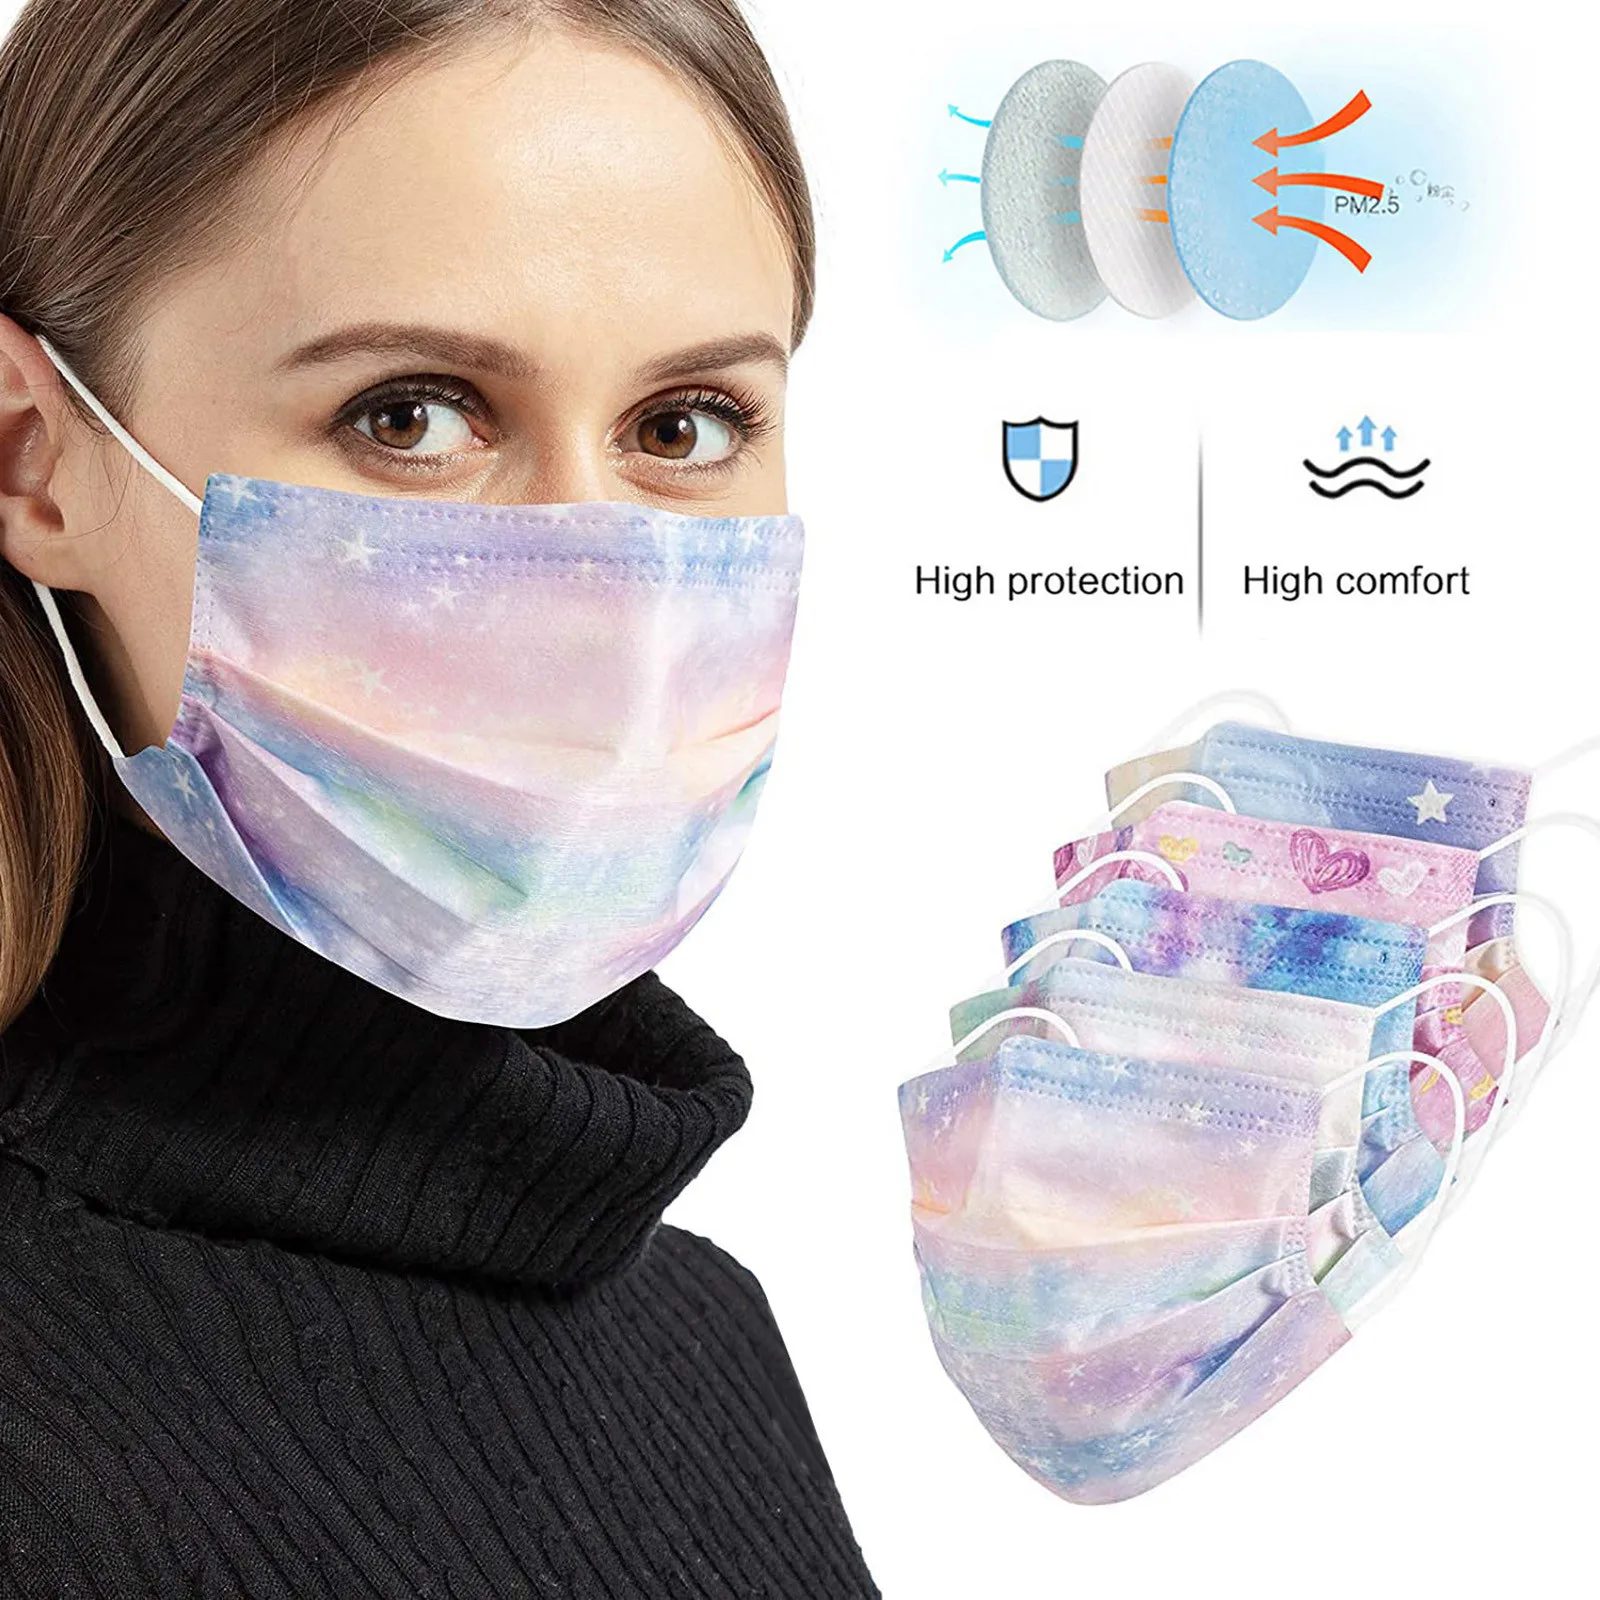 

50PC Adult Tie dye Prints Masks Unisex Disposable Face Mask Industrial 3Ply Dustproof Filter Pm2.5 Mask Earloop Bandage Masque